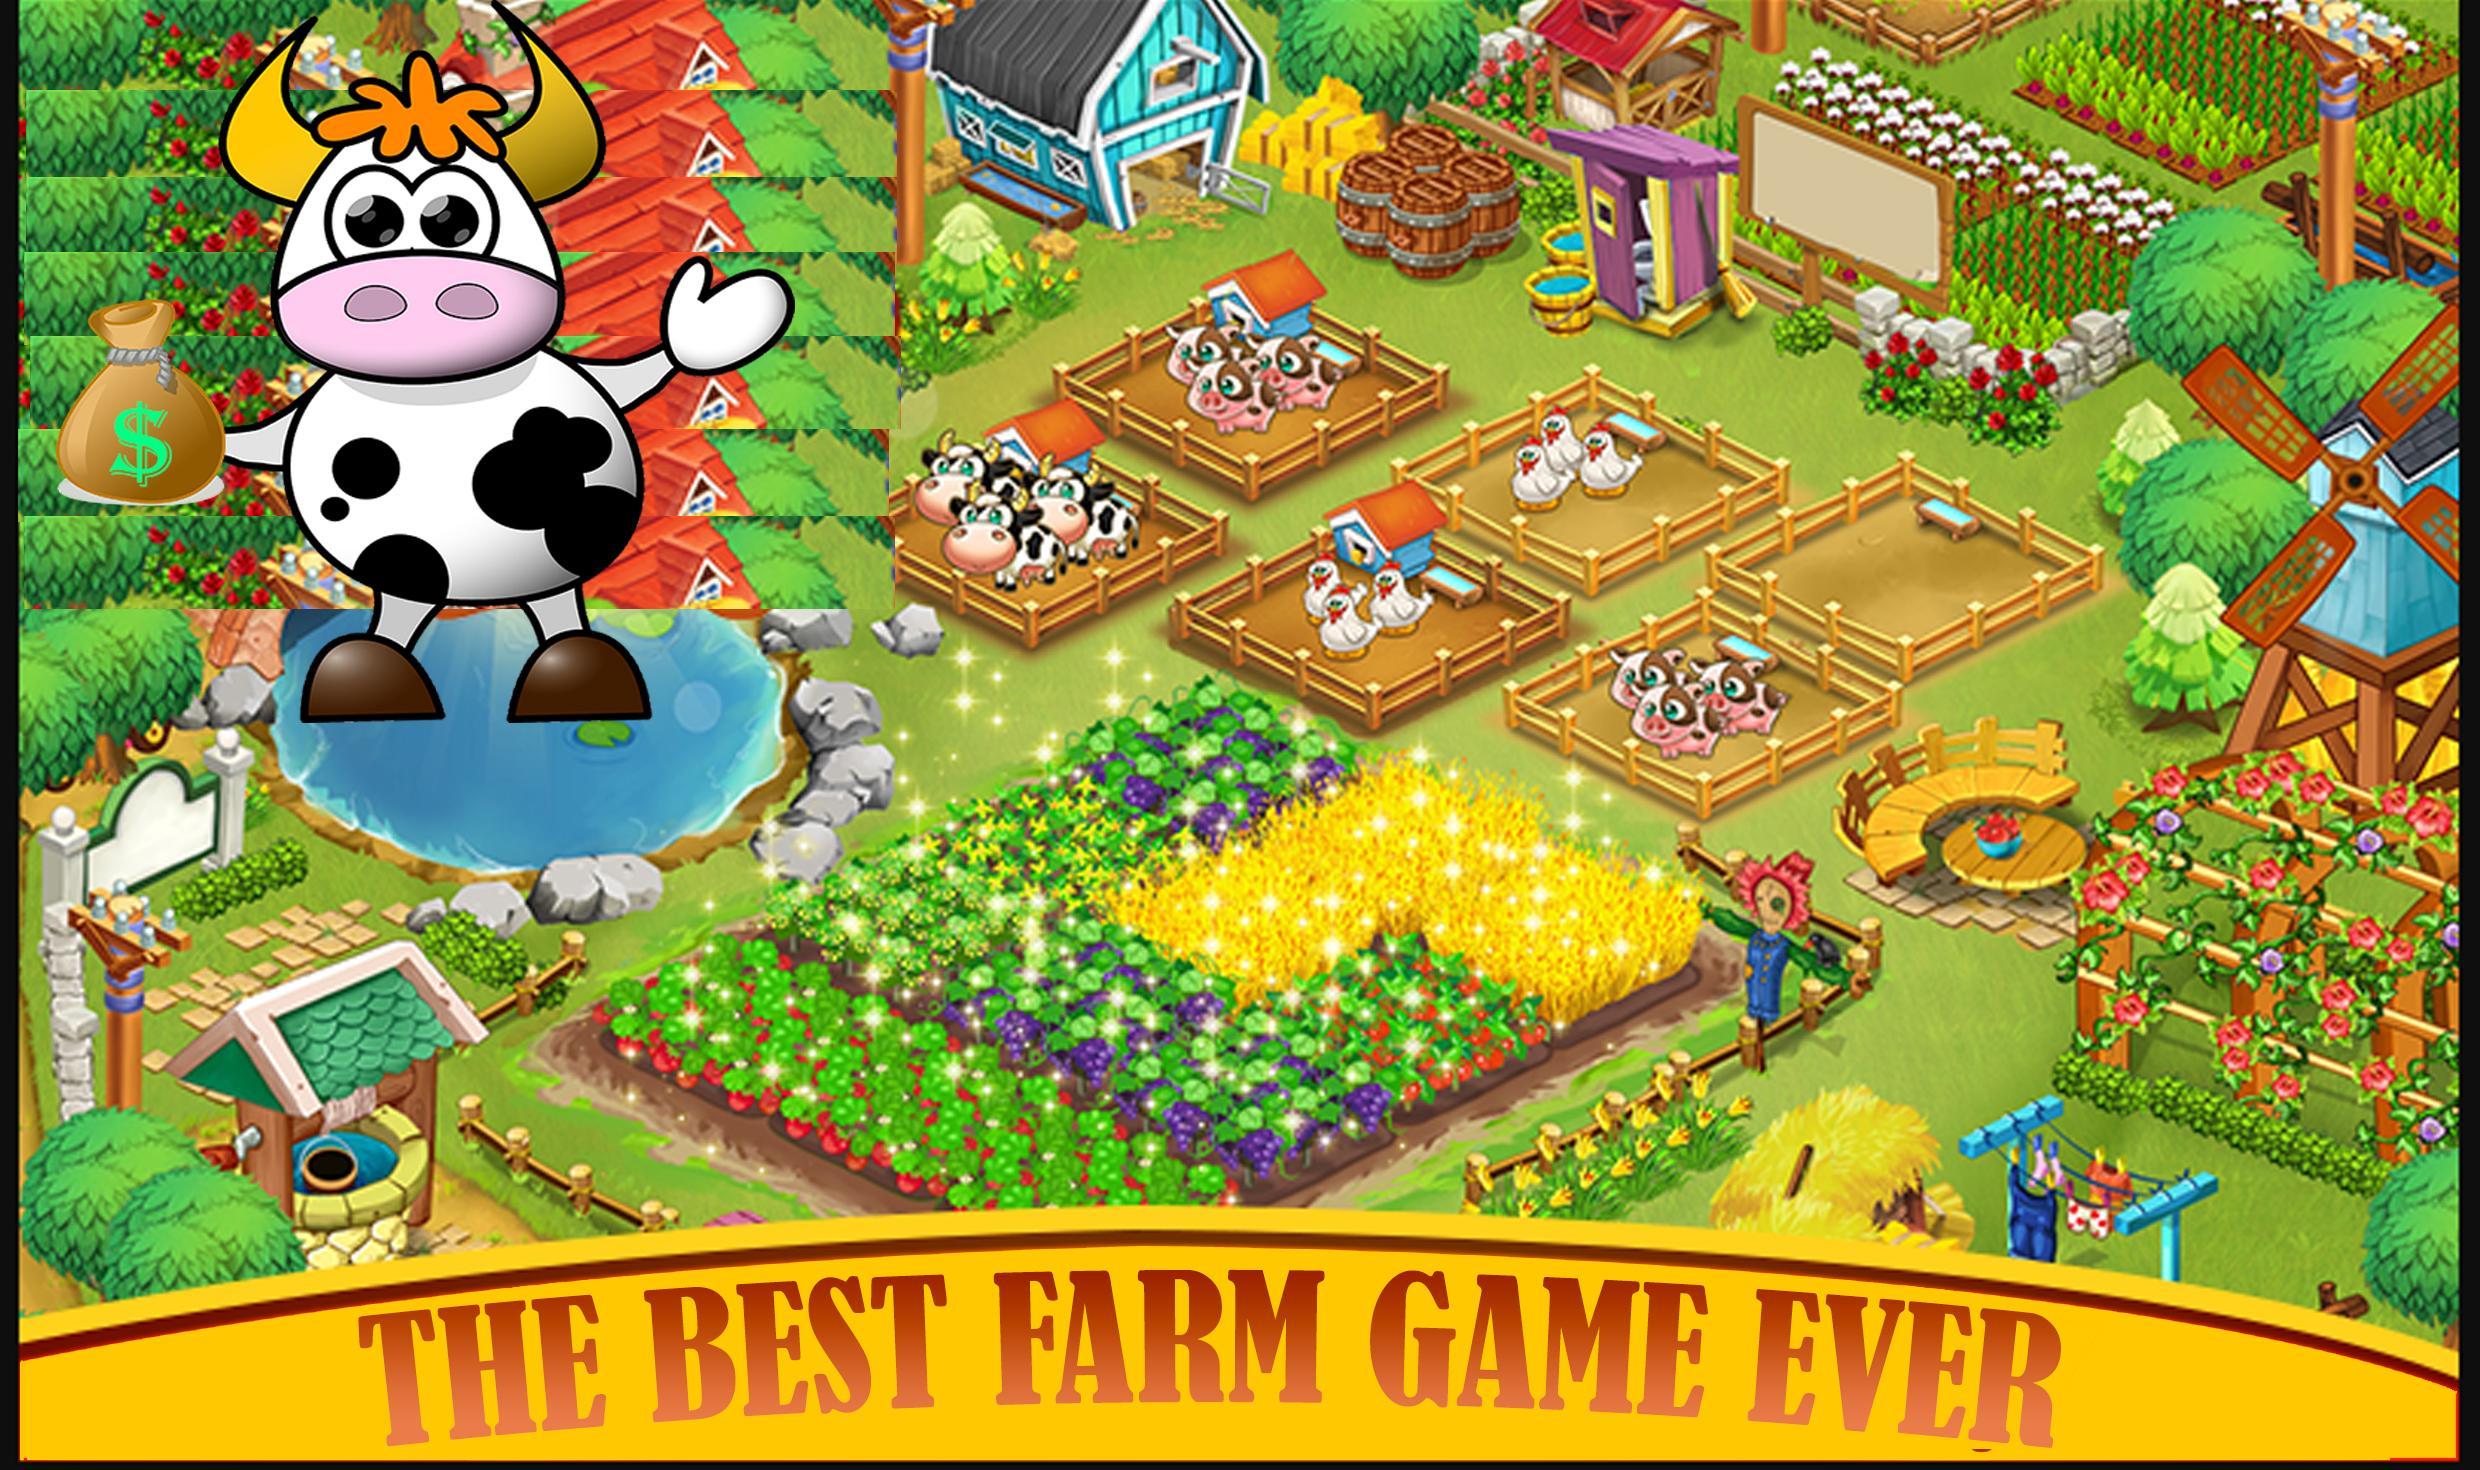 Farm village business - Farm game offline 2019 โ ป ส เ ต อ ร.